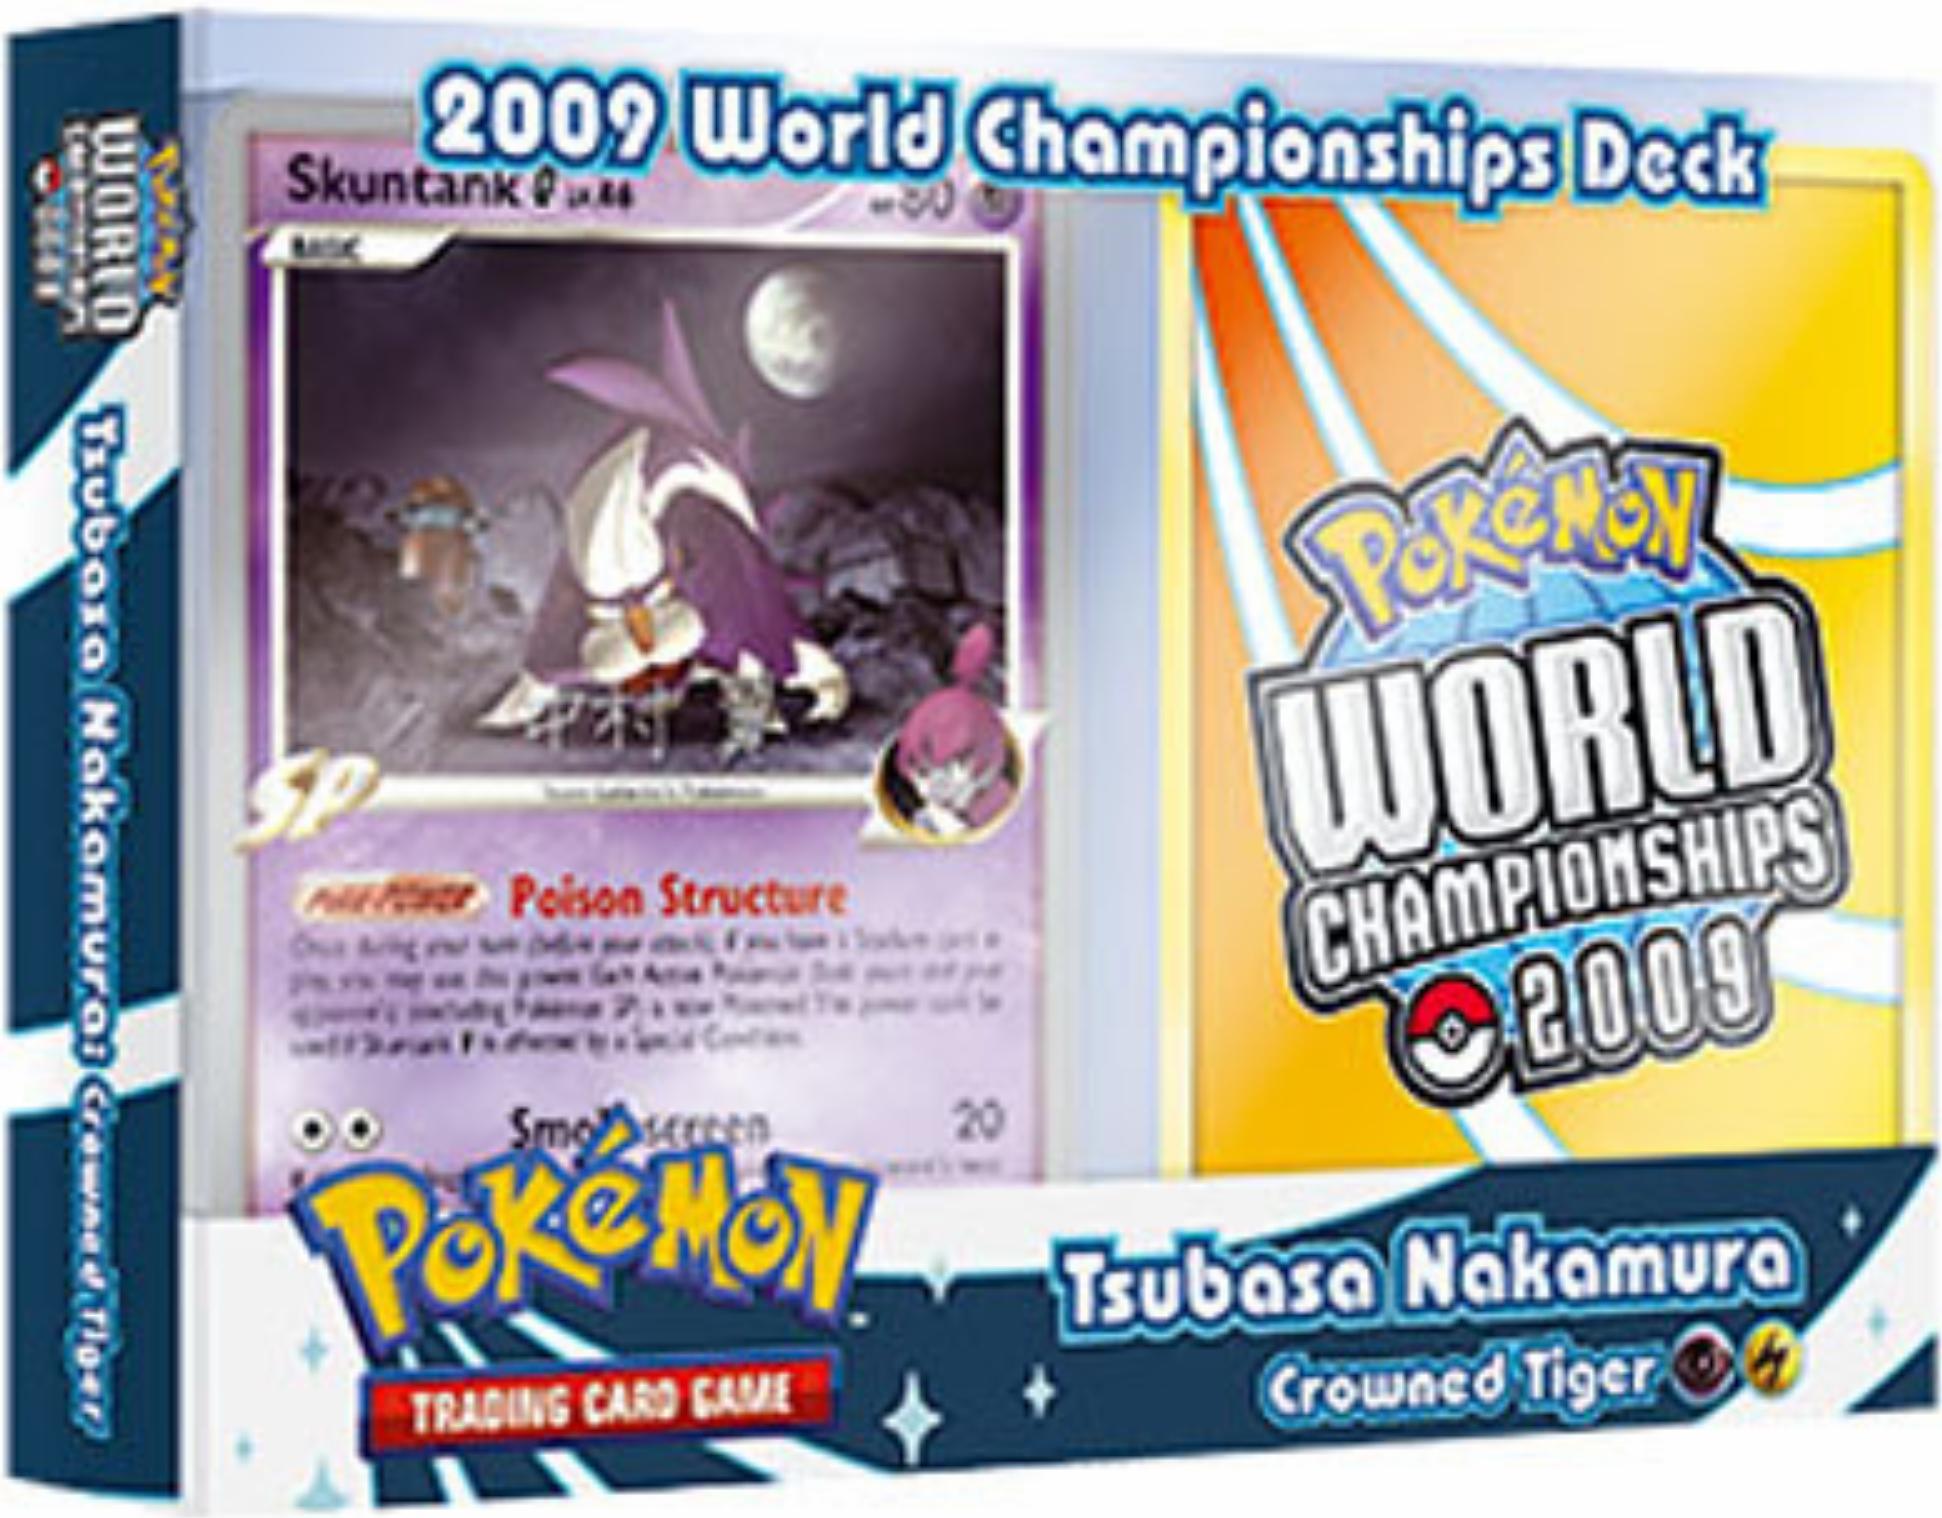 2009 World Championships Deck (Crowned Tiger - Tsubasa Kamura) | Devastation Store